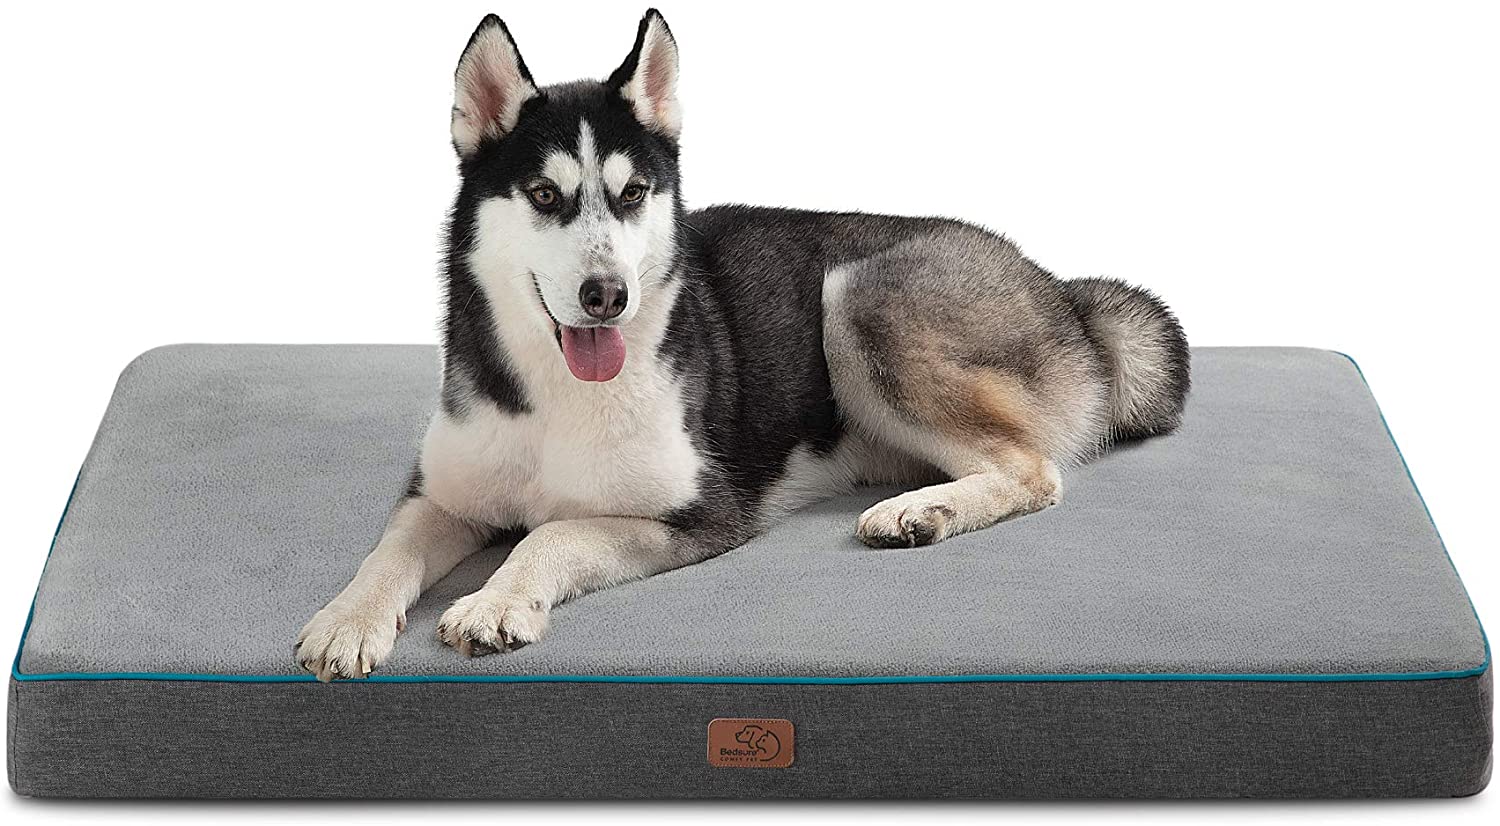 Bedsure Large Memory Foam Orthopedic Dog Bed